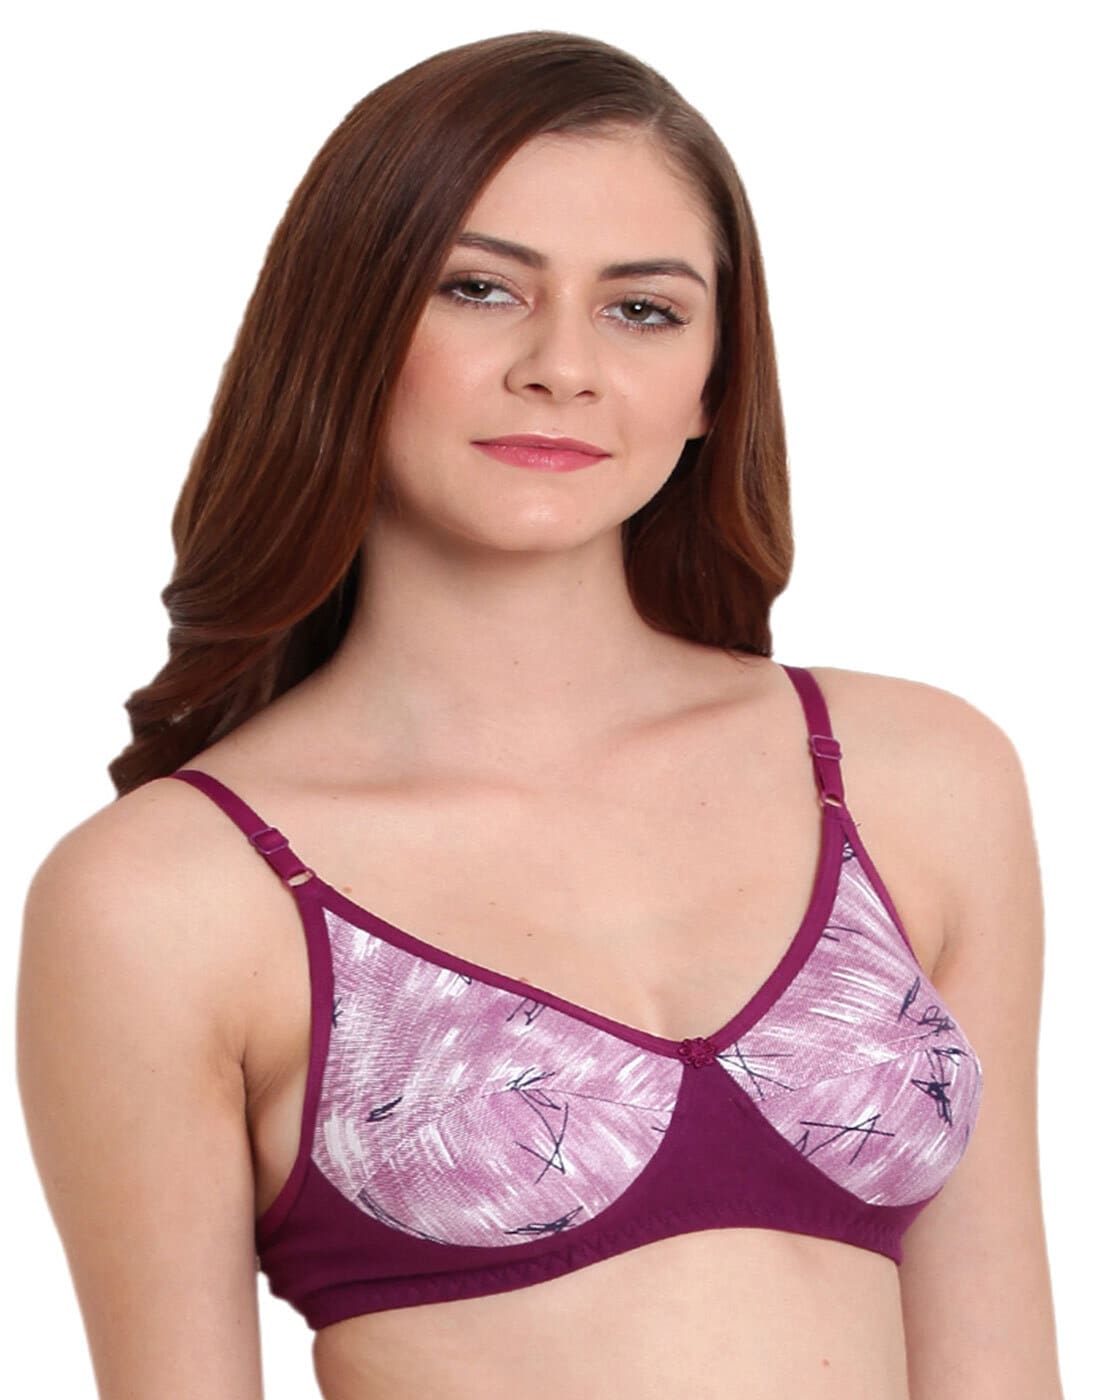 Buy Purple Bras for Women by VIRAL GIRL Online